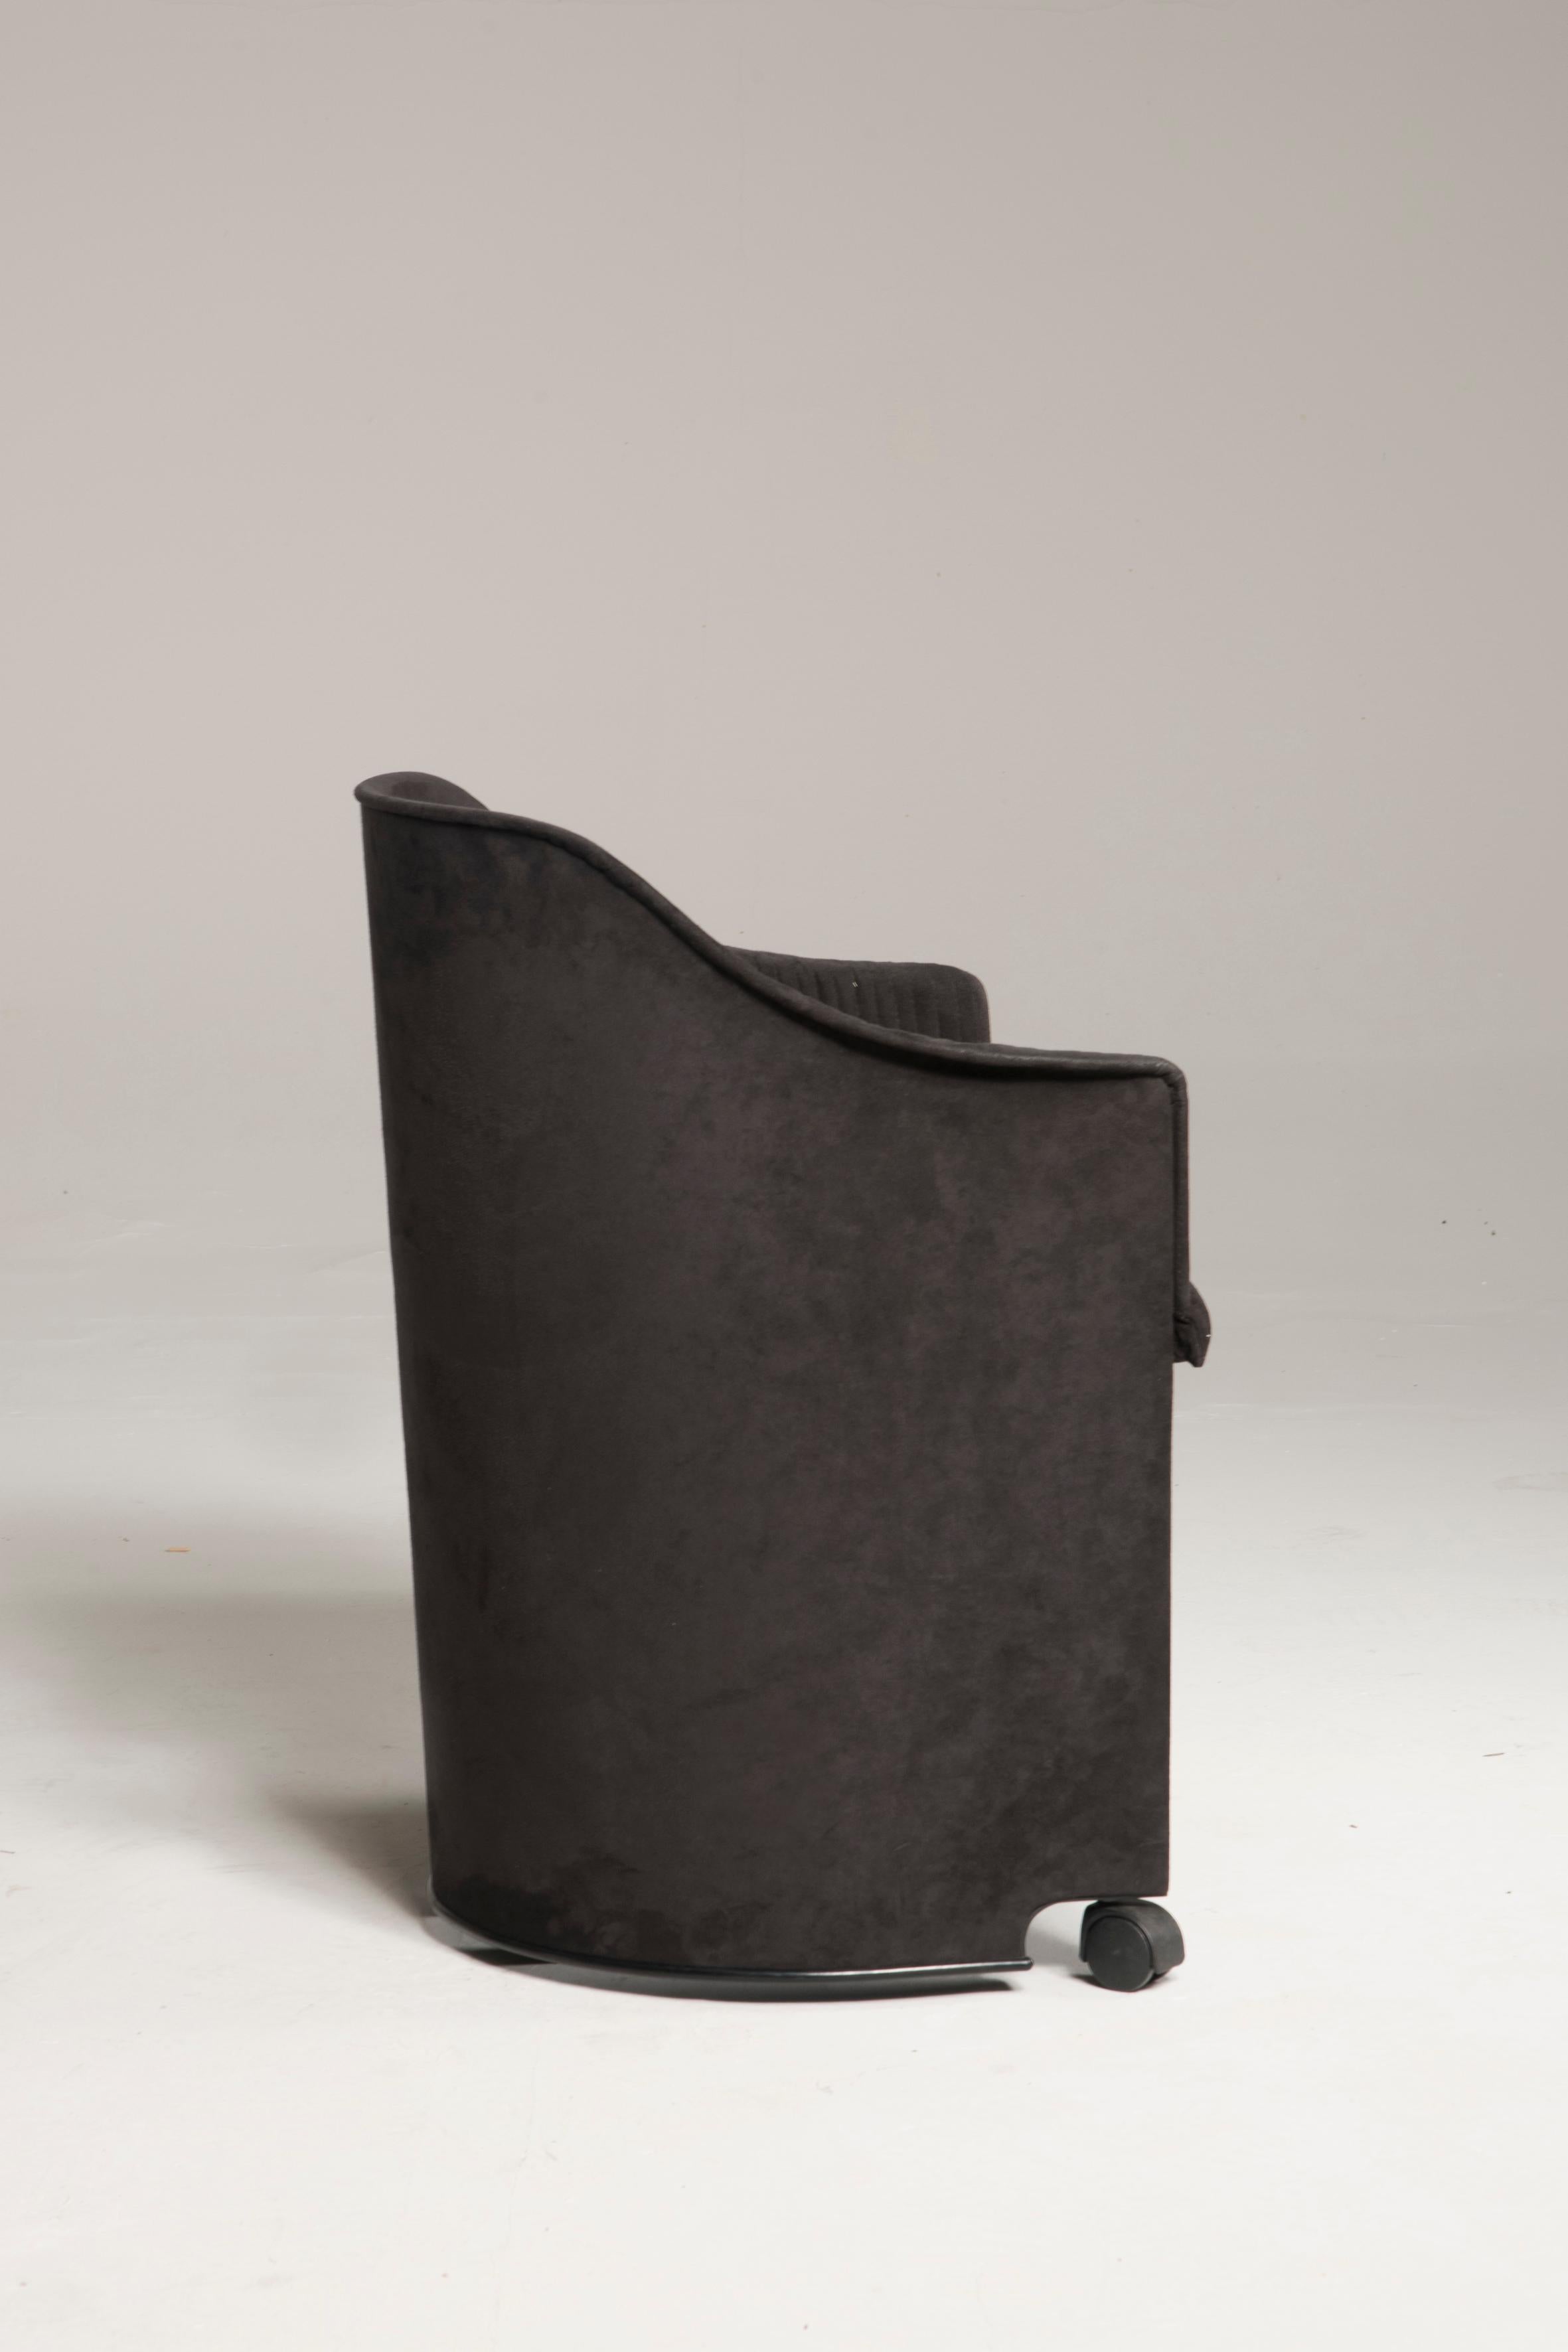 Acht Rädern-Sessel der B&B MaxAlto Kollektion Alcantara, 1990er Jahre (Italienisch) im Angebot